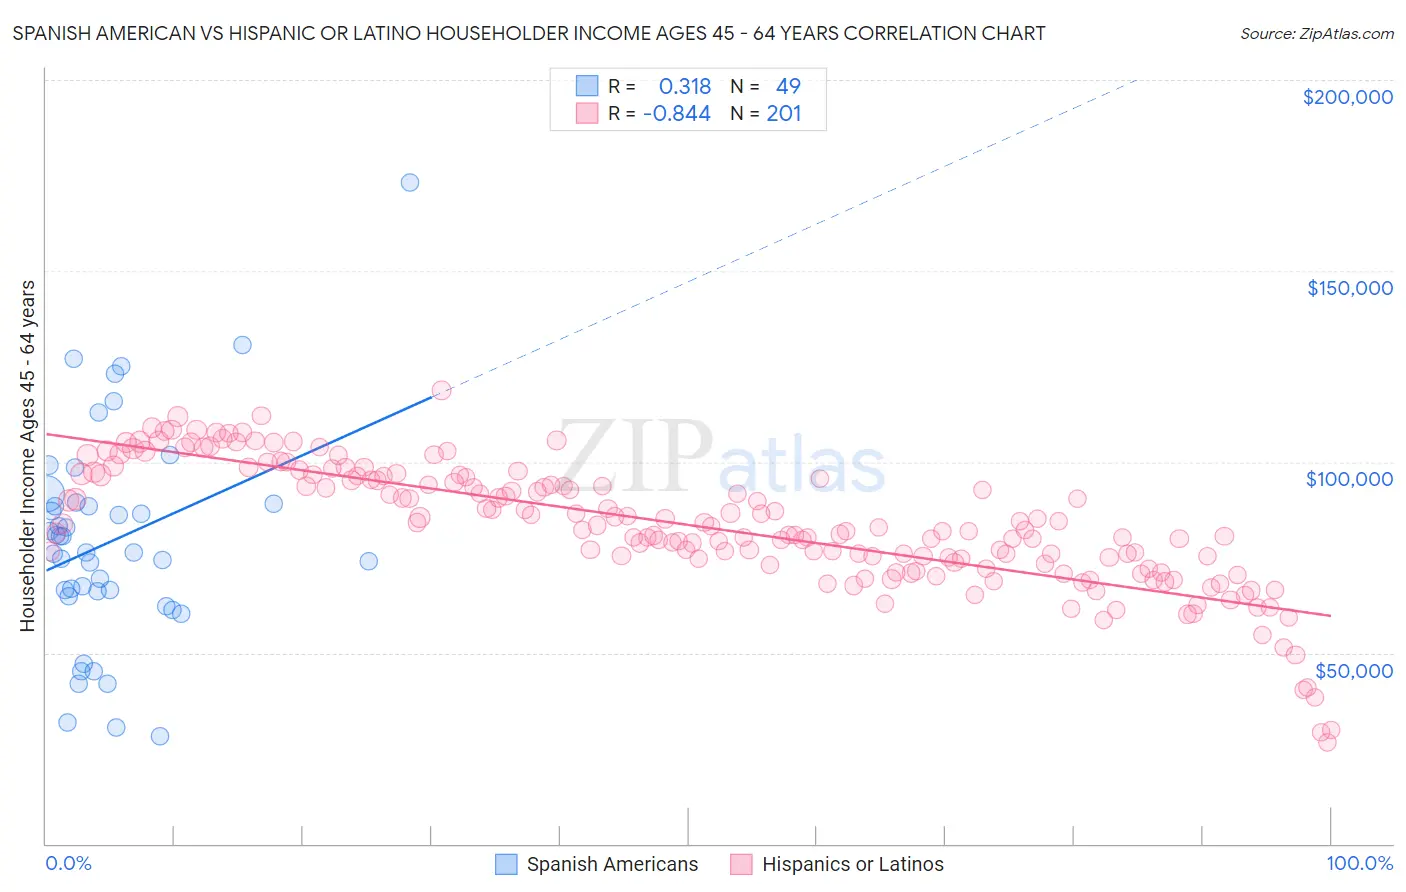 Spanish American vs Hispanic or Latino Householder Income Ages 45 - 64 years